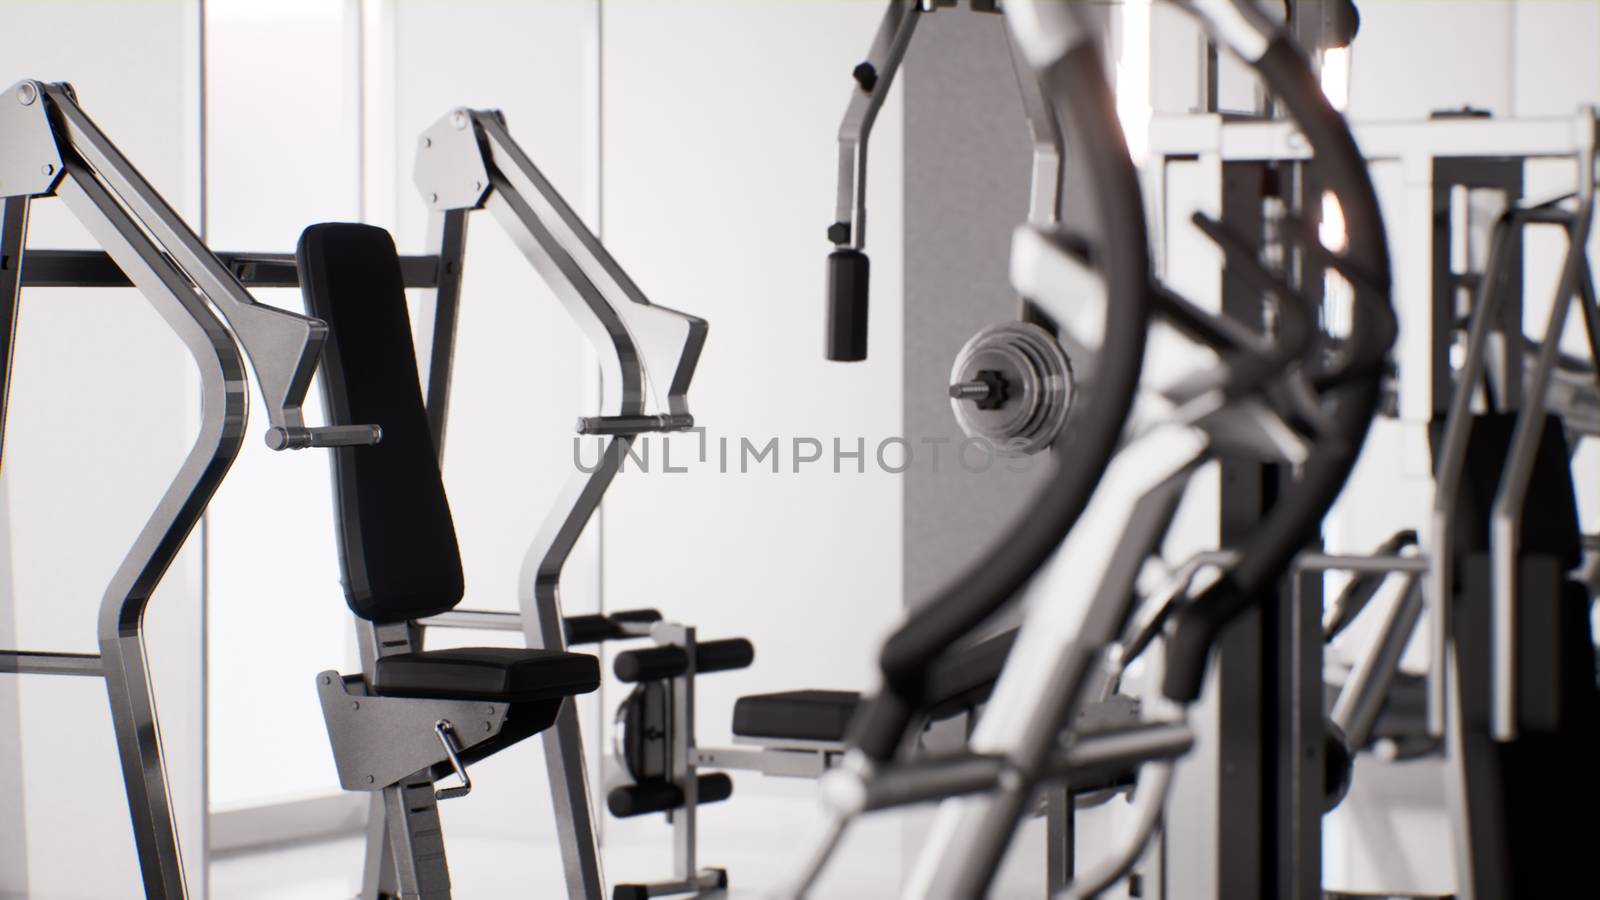 sports equipment in empty modern gym interior 3d render, heavy gym equipment, modern fitness club